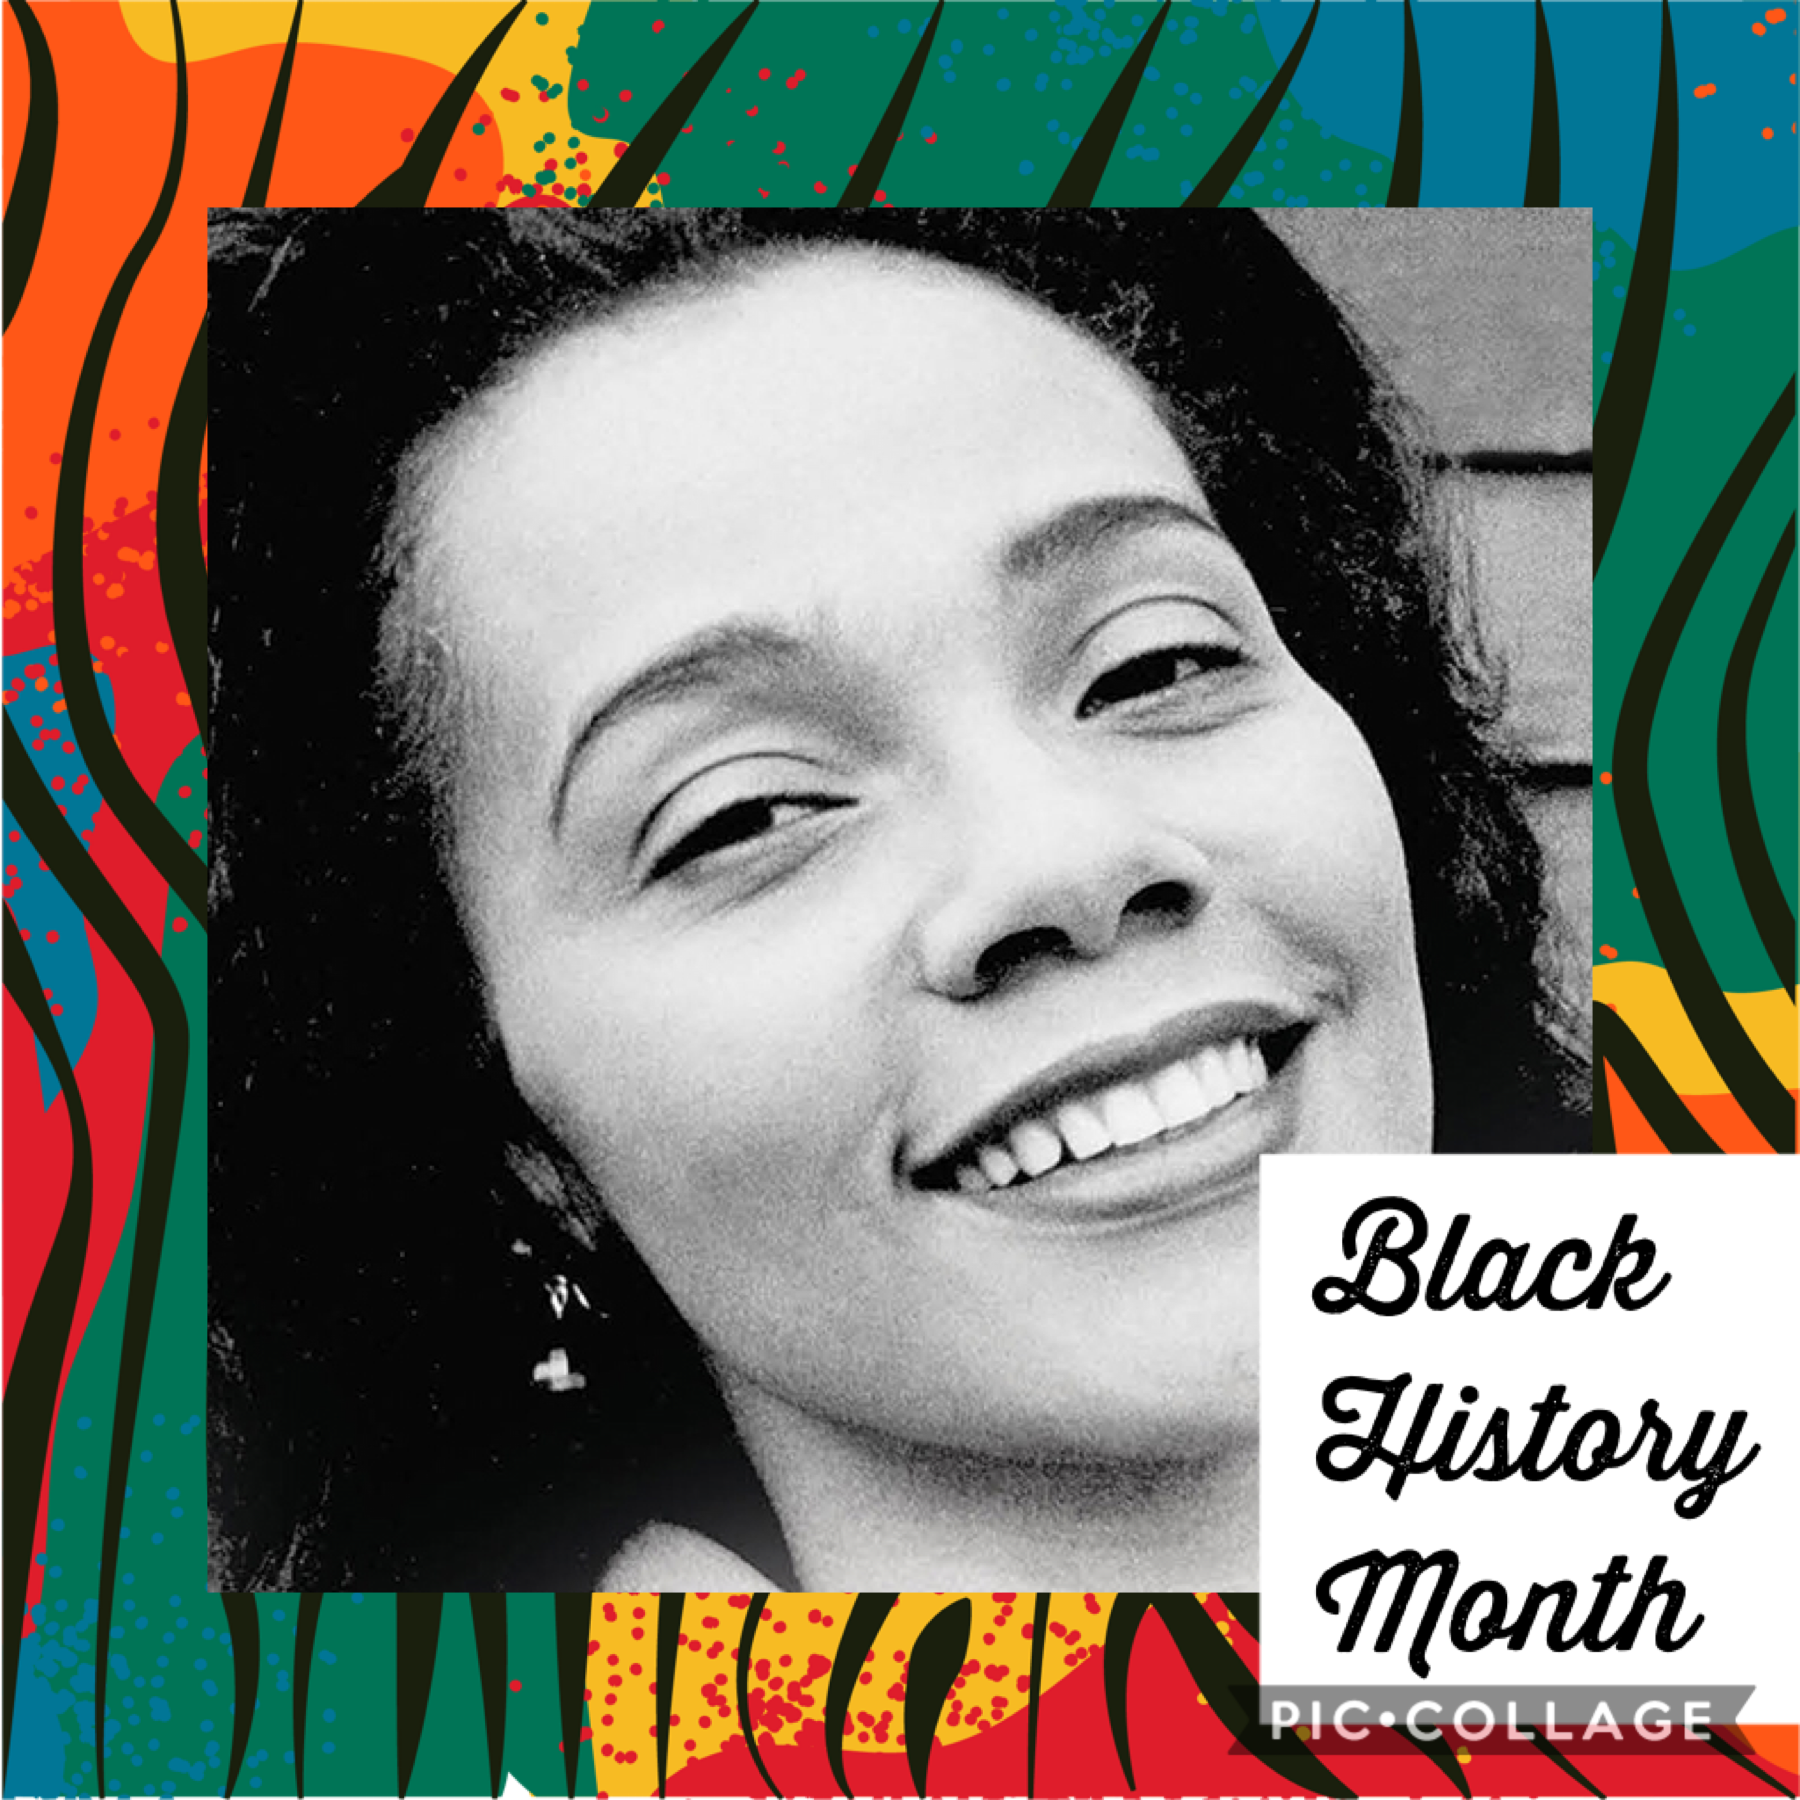 Celebrate black history month!